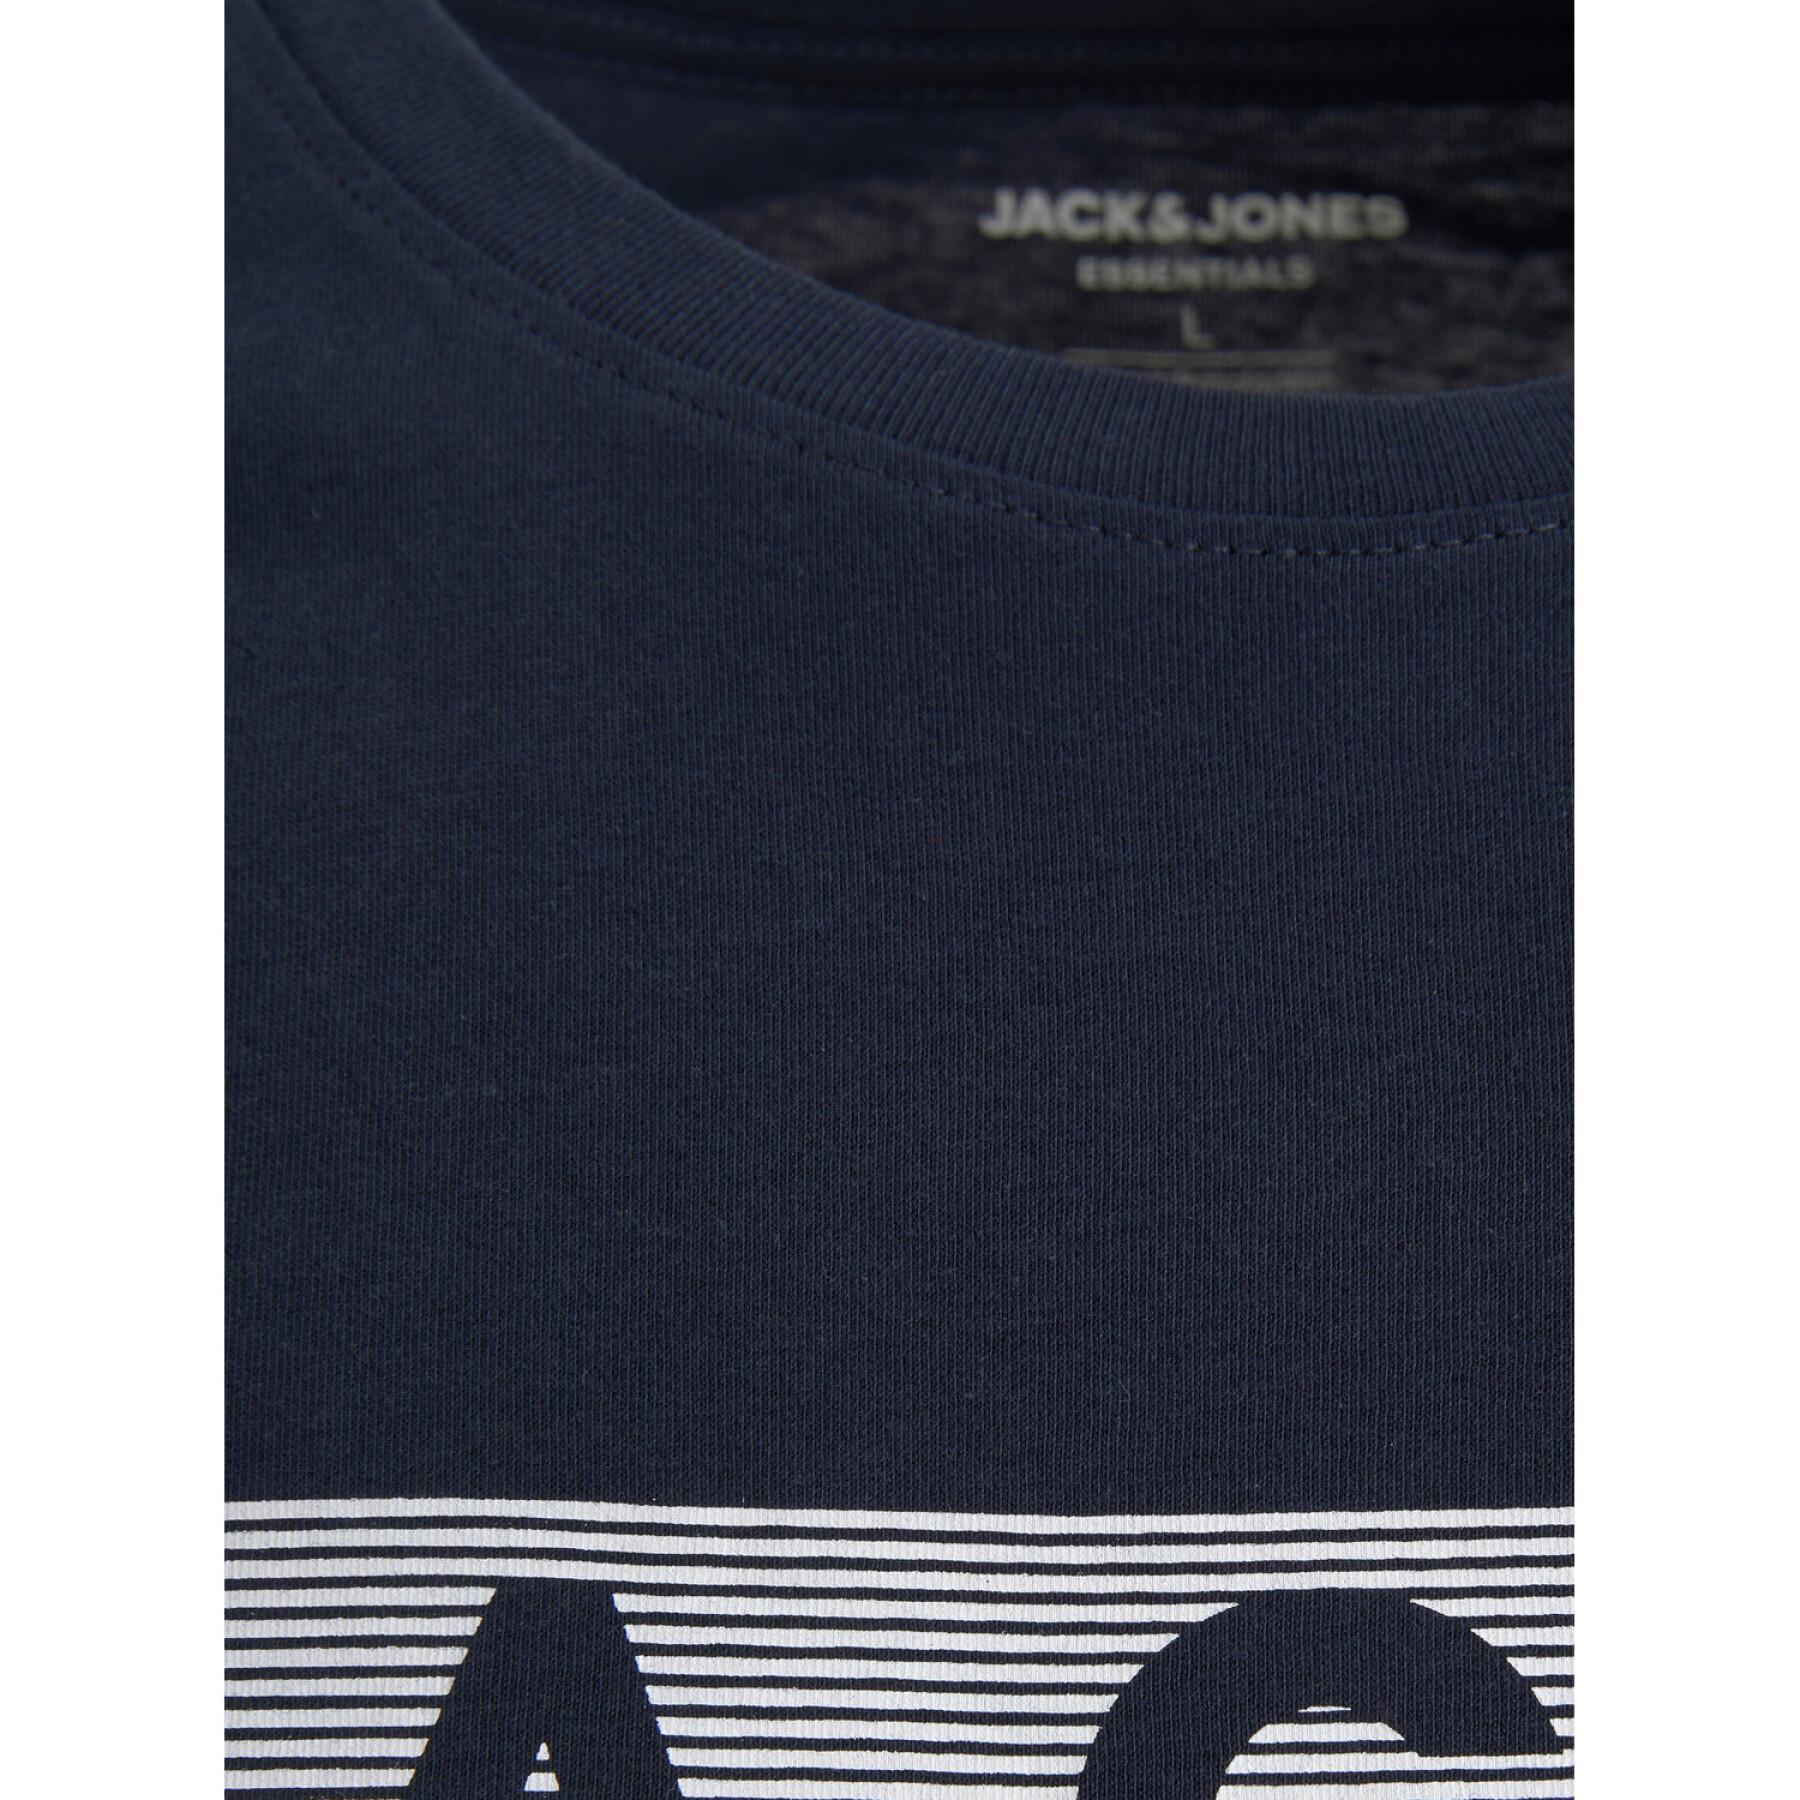 Maglietta Jack & Jones Corp Logo